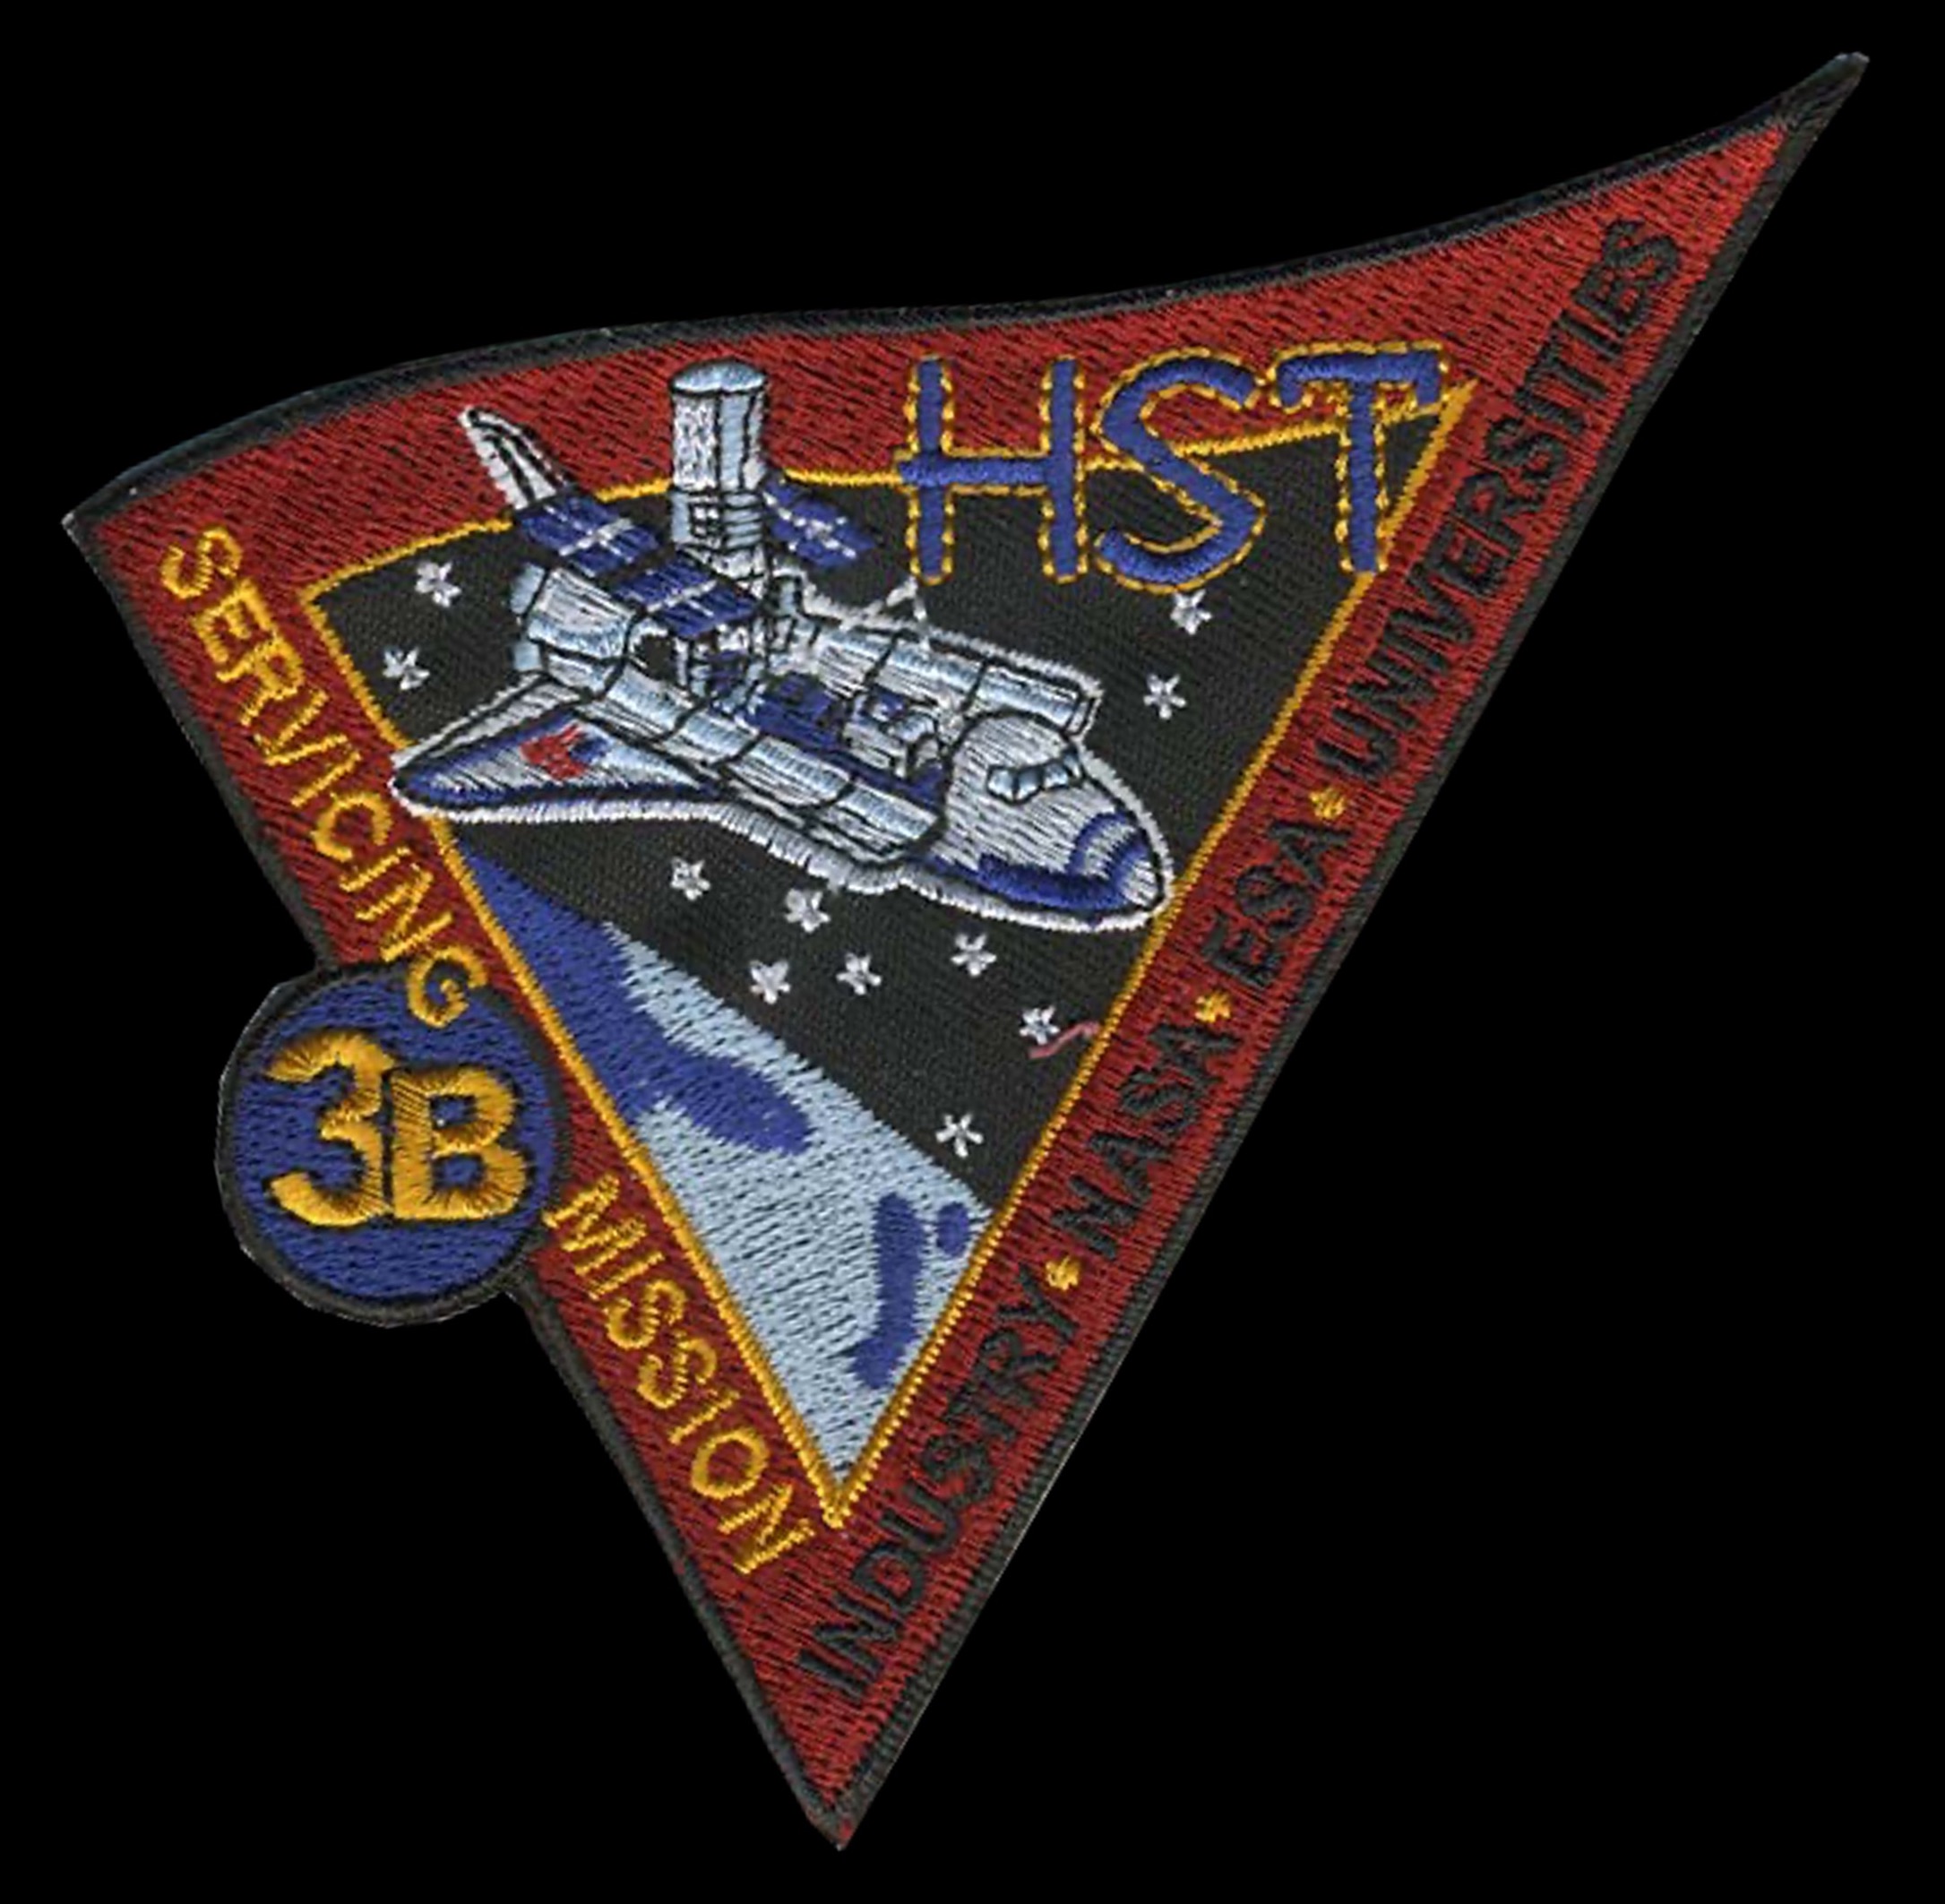 Hubble Servicing Mission 3B Patch